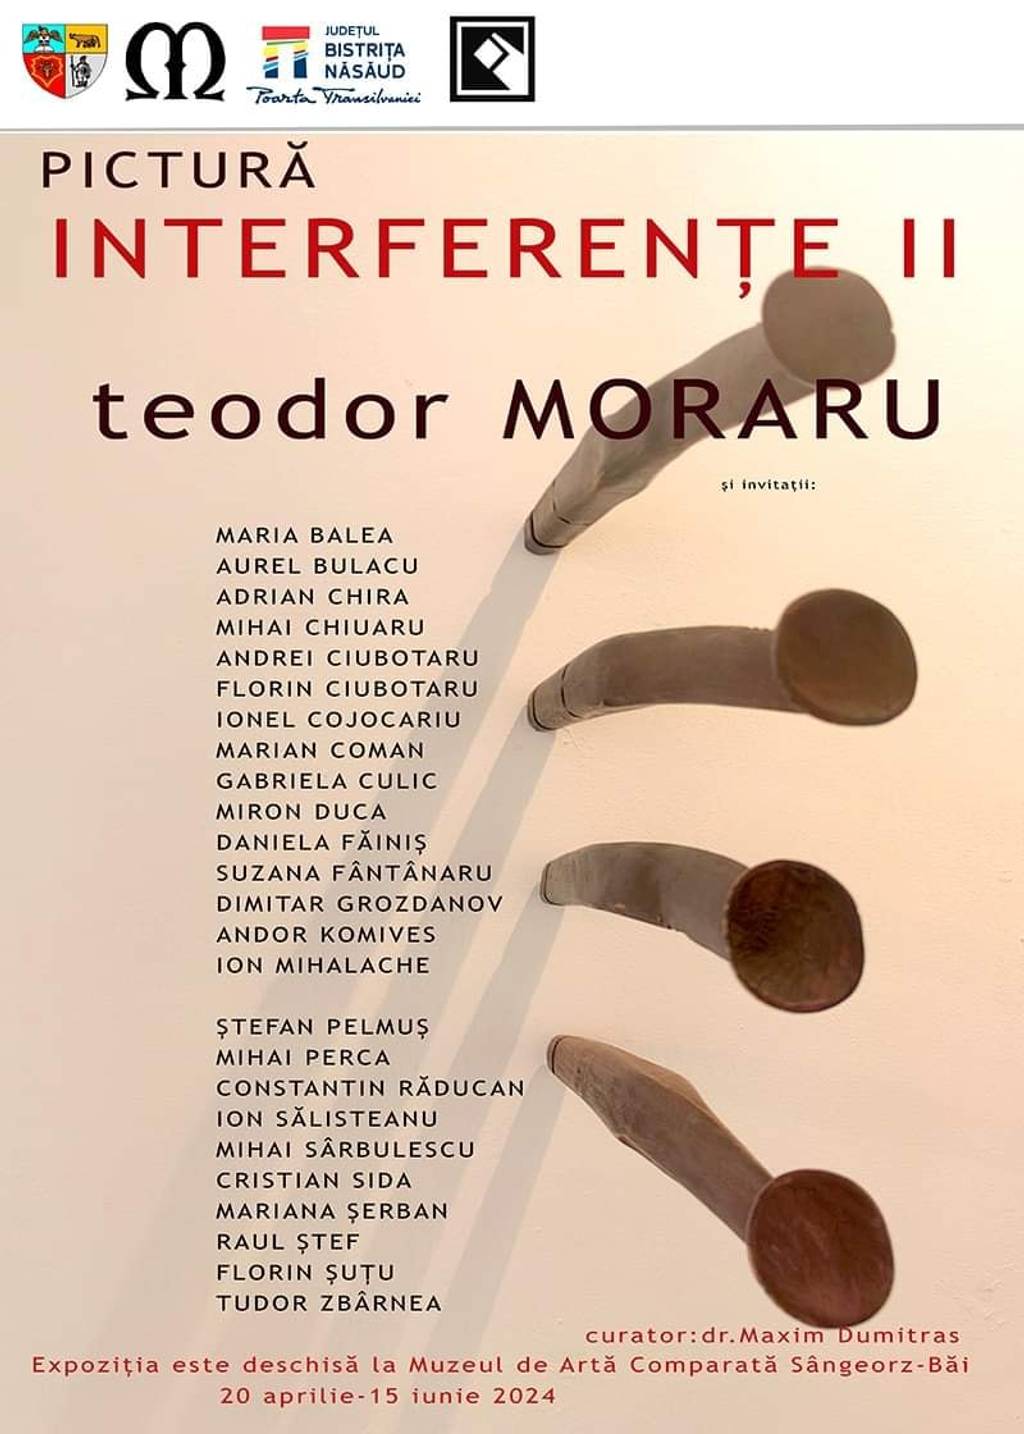 Teodor Moraru: "Interferențe II"